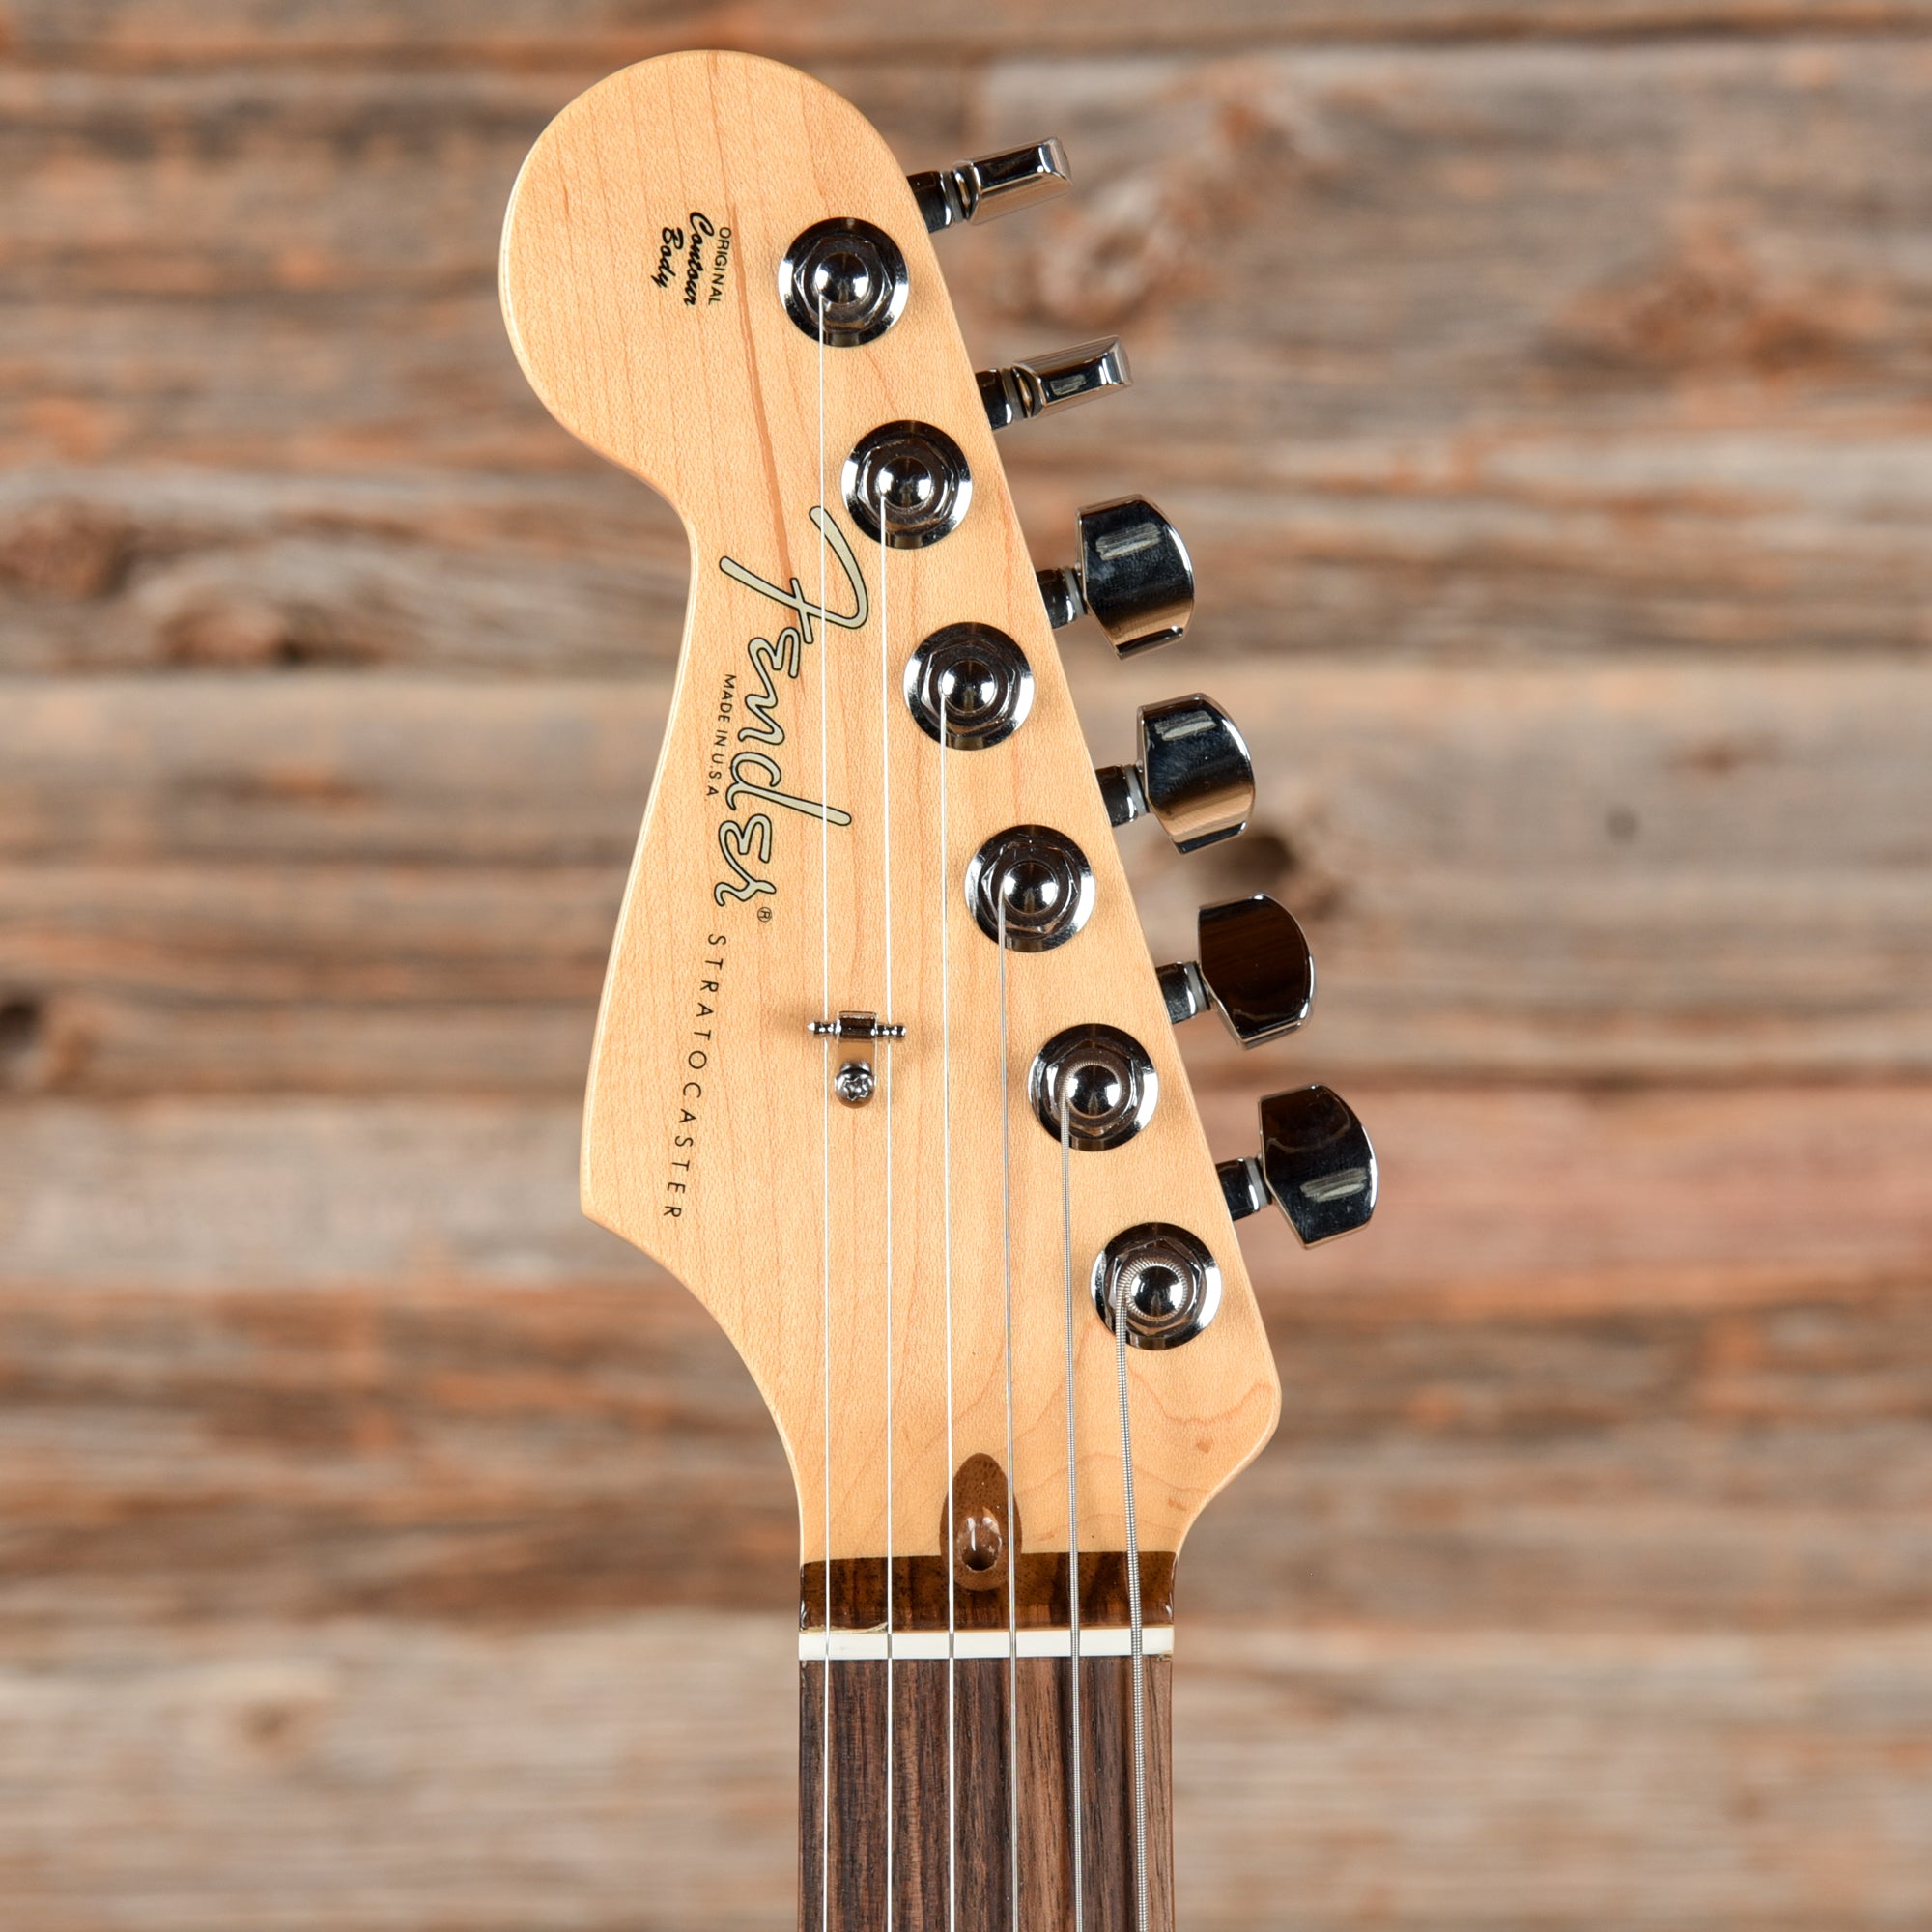 Fender American Standard Stratocaster Mystic Blue 2012 LEFTY